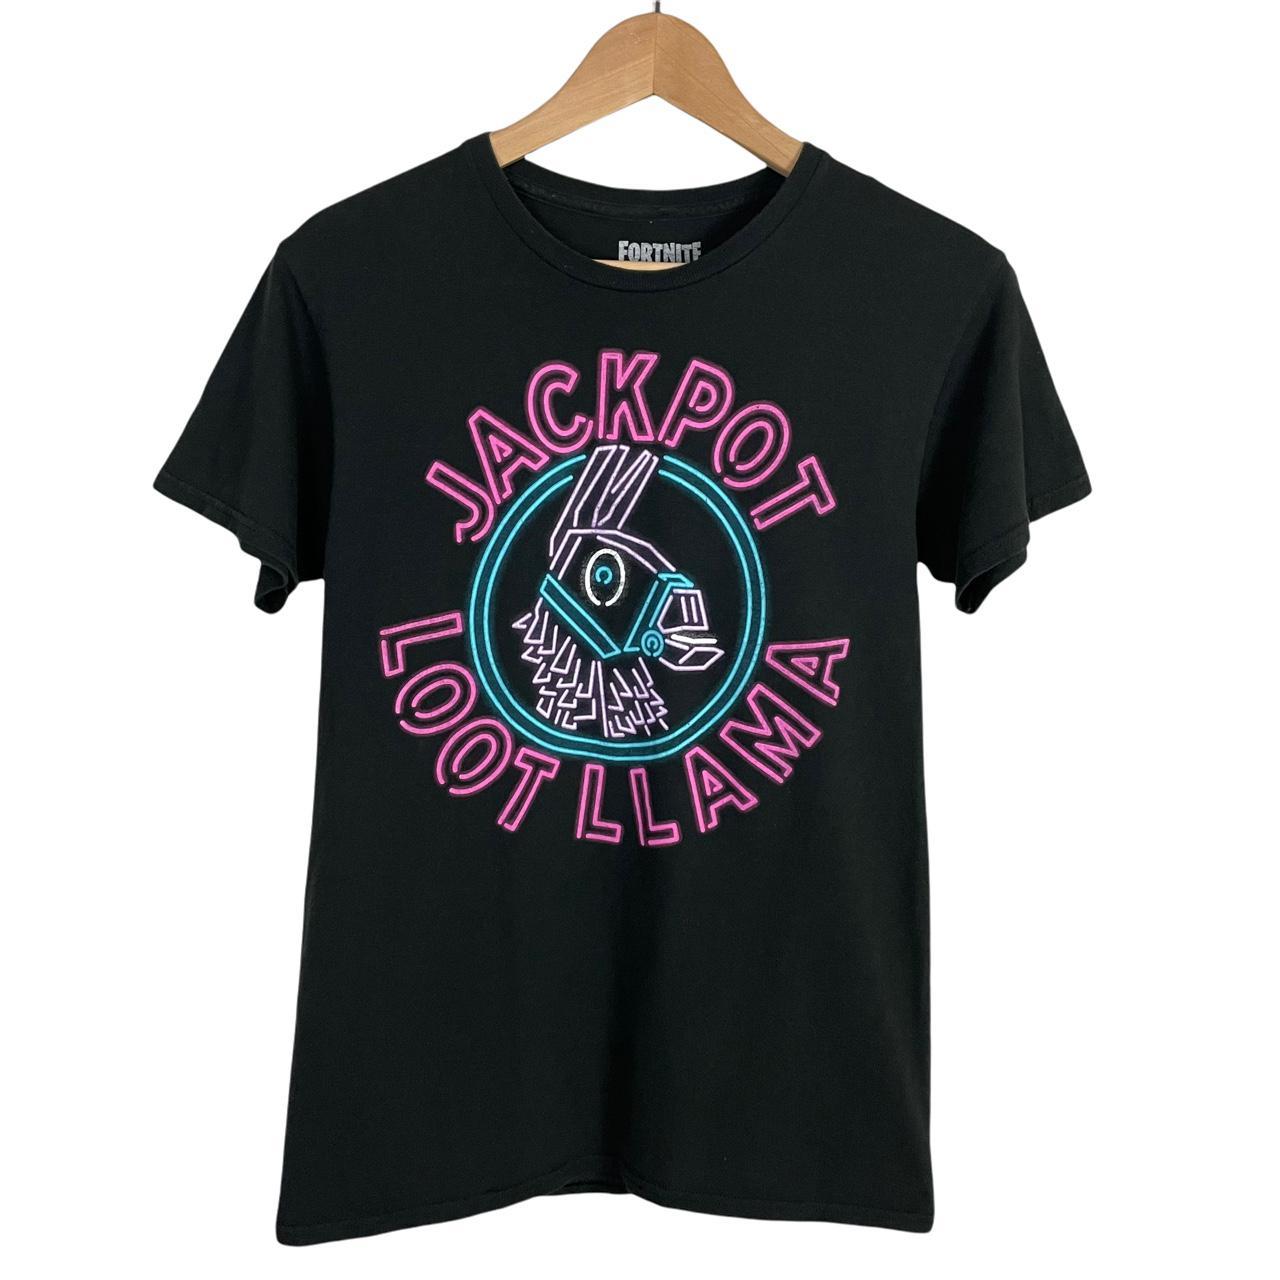 Product Image 1 - Fortnite Jackpot Loot Llama T-Shirt
•